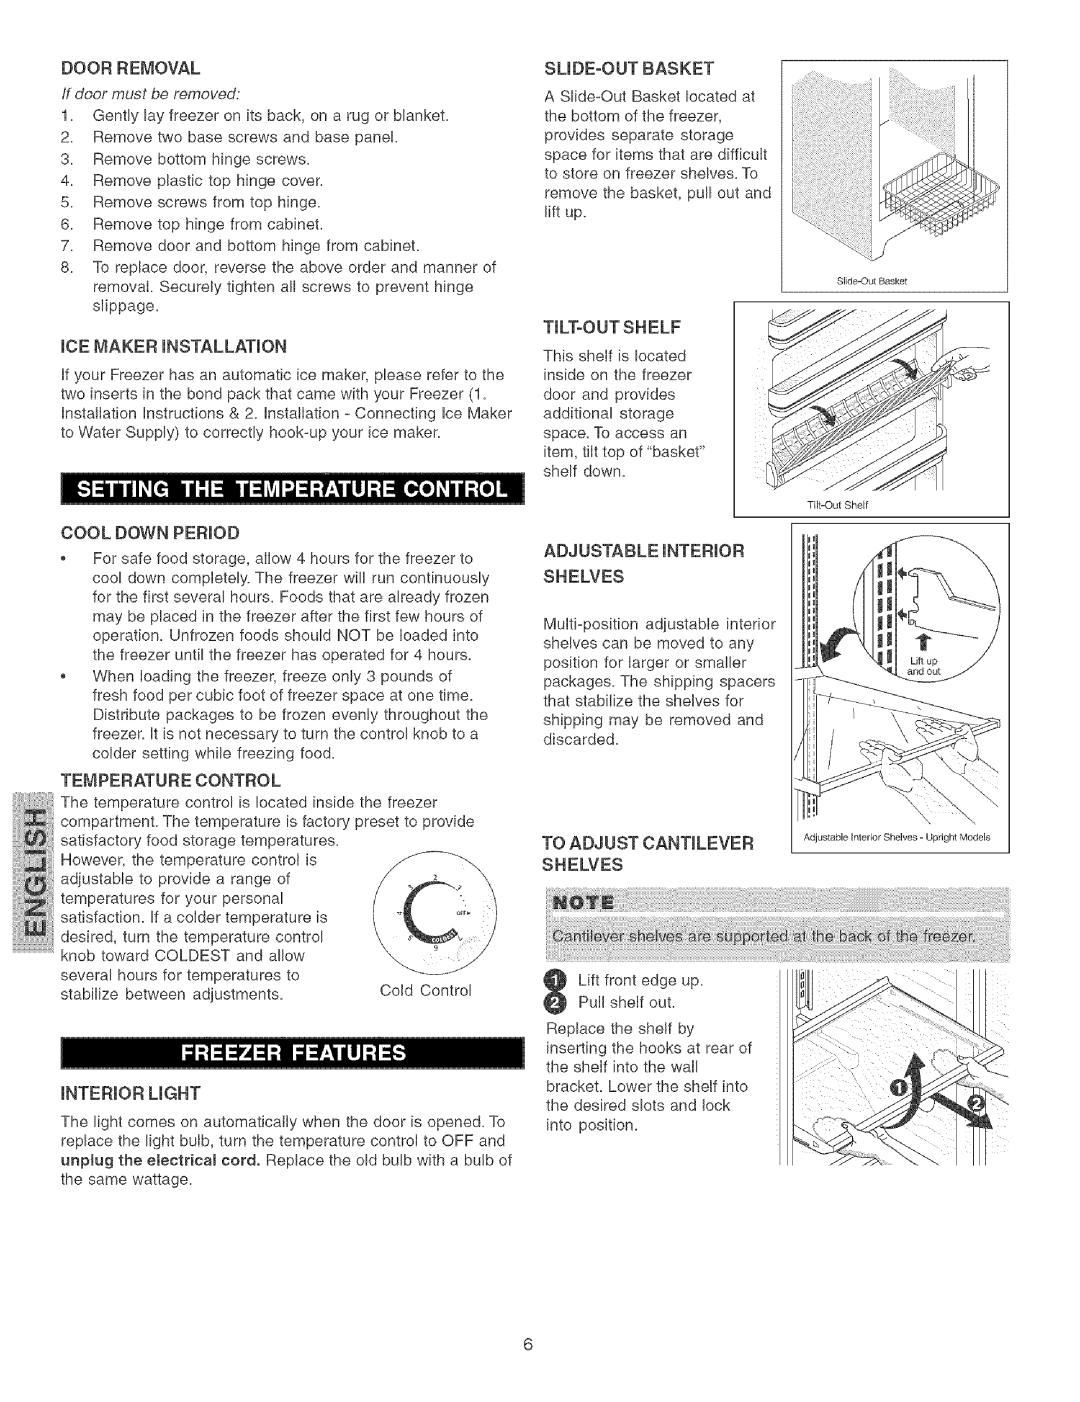 Kenmore 44733 manual iCE MAKER iNSTALLATiON, Interior Light, Tilt=Out Shelf, Adjustable Interior Shelves 